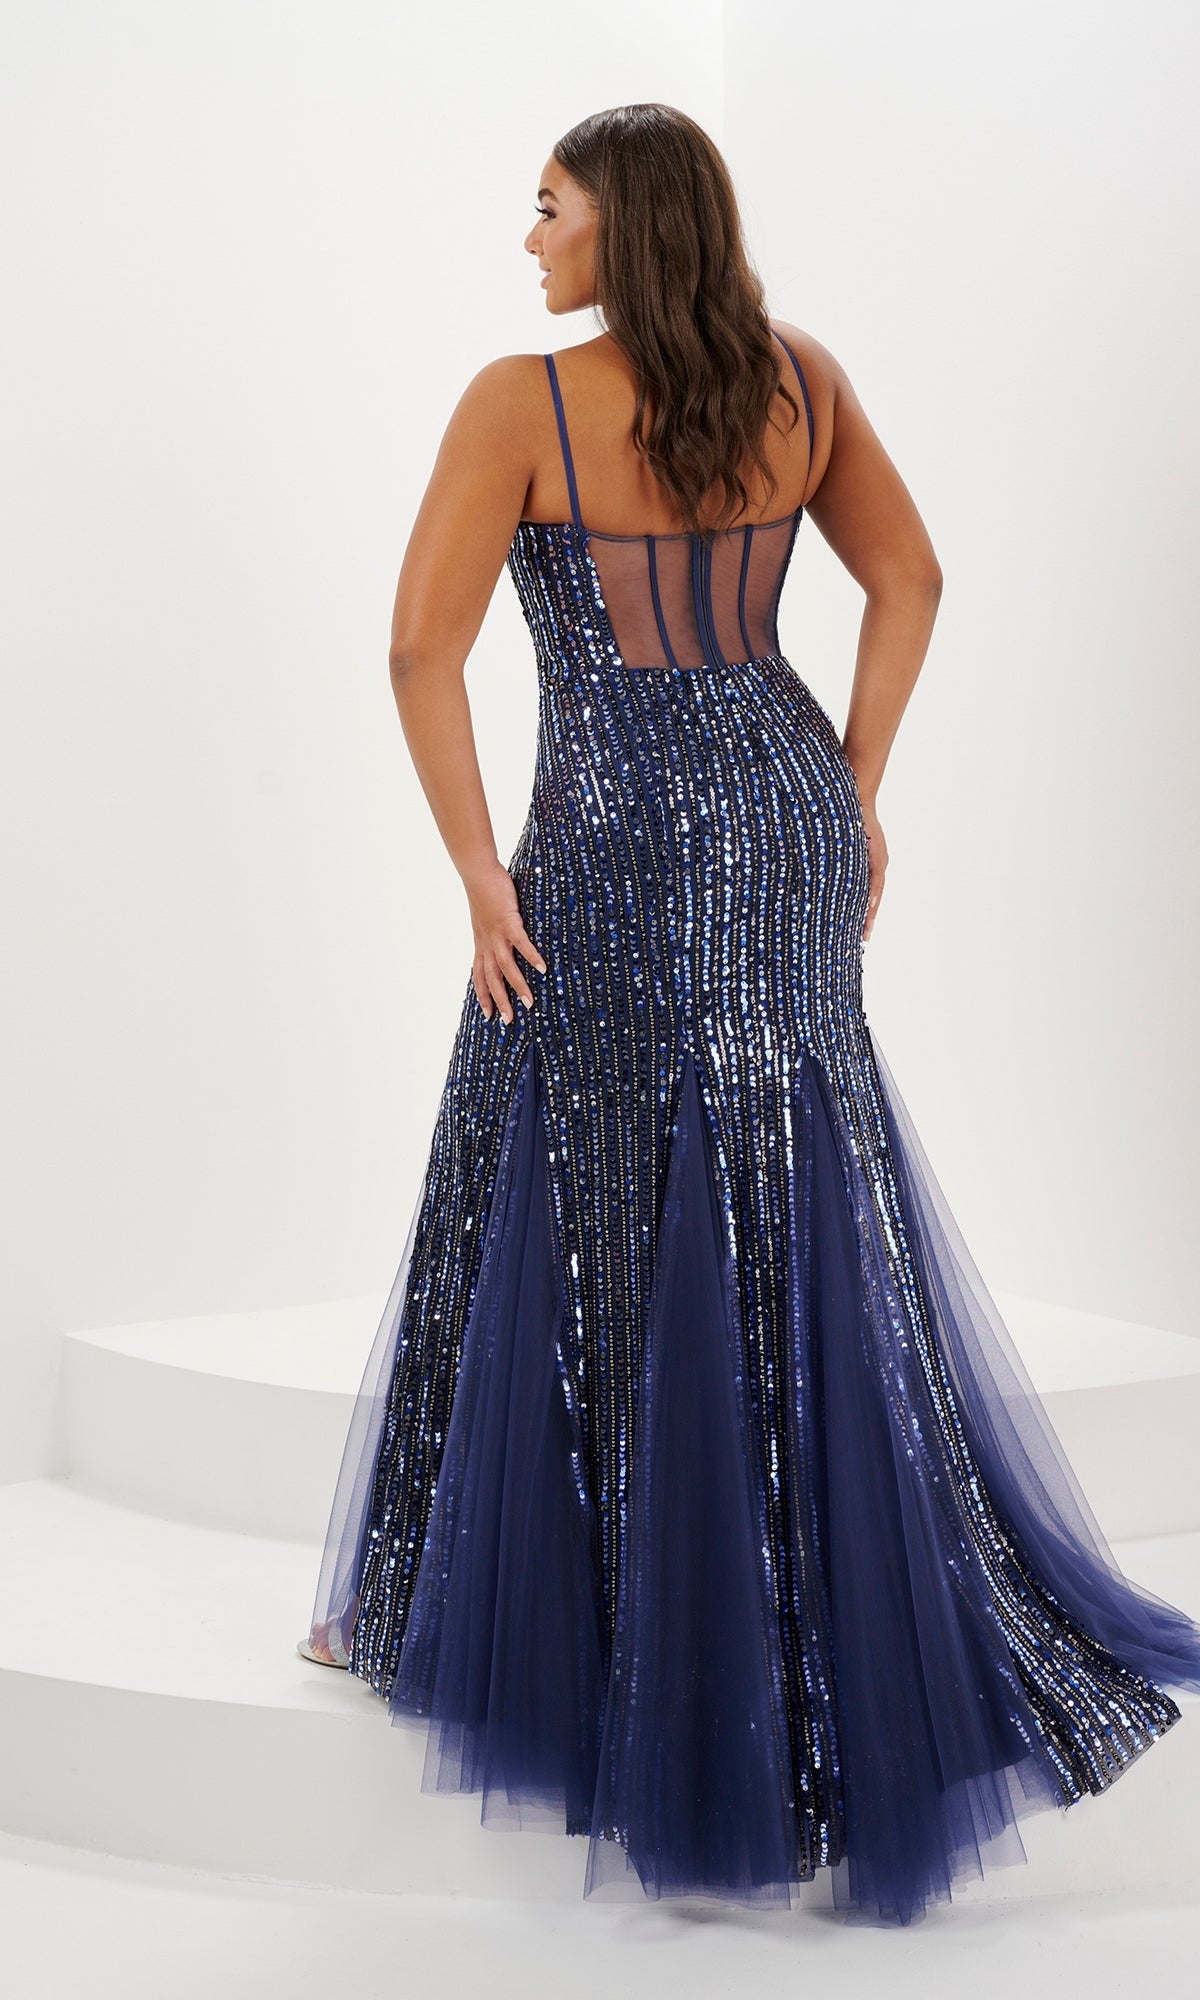 Long Plus-Size Prom Dress 16131 by Tiffany